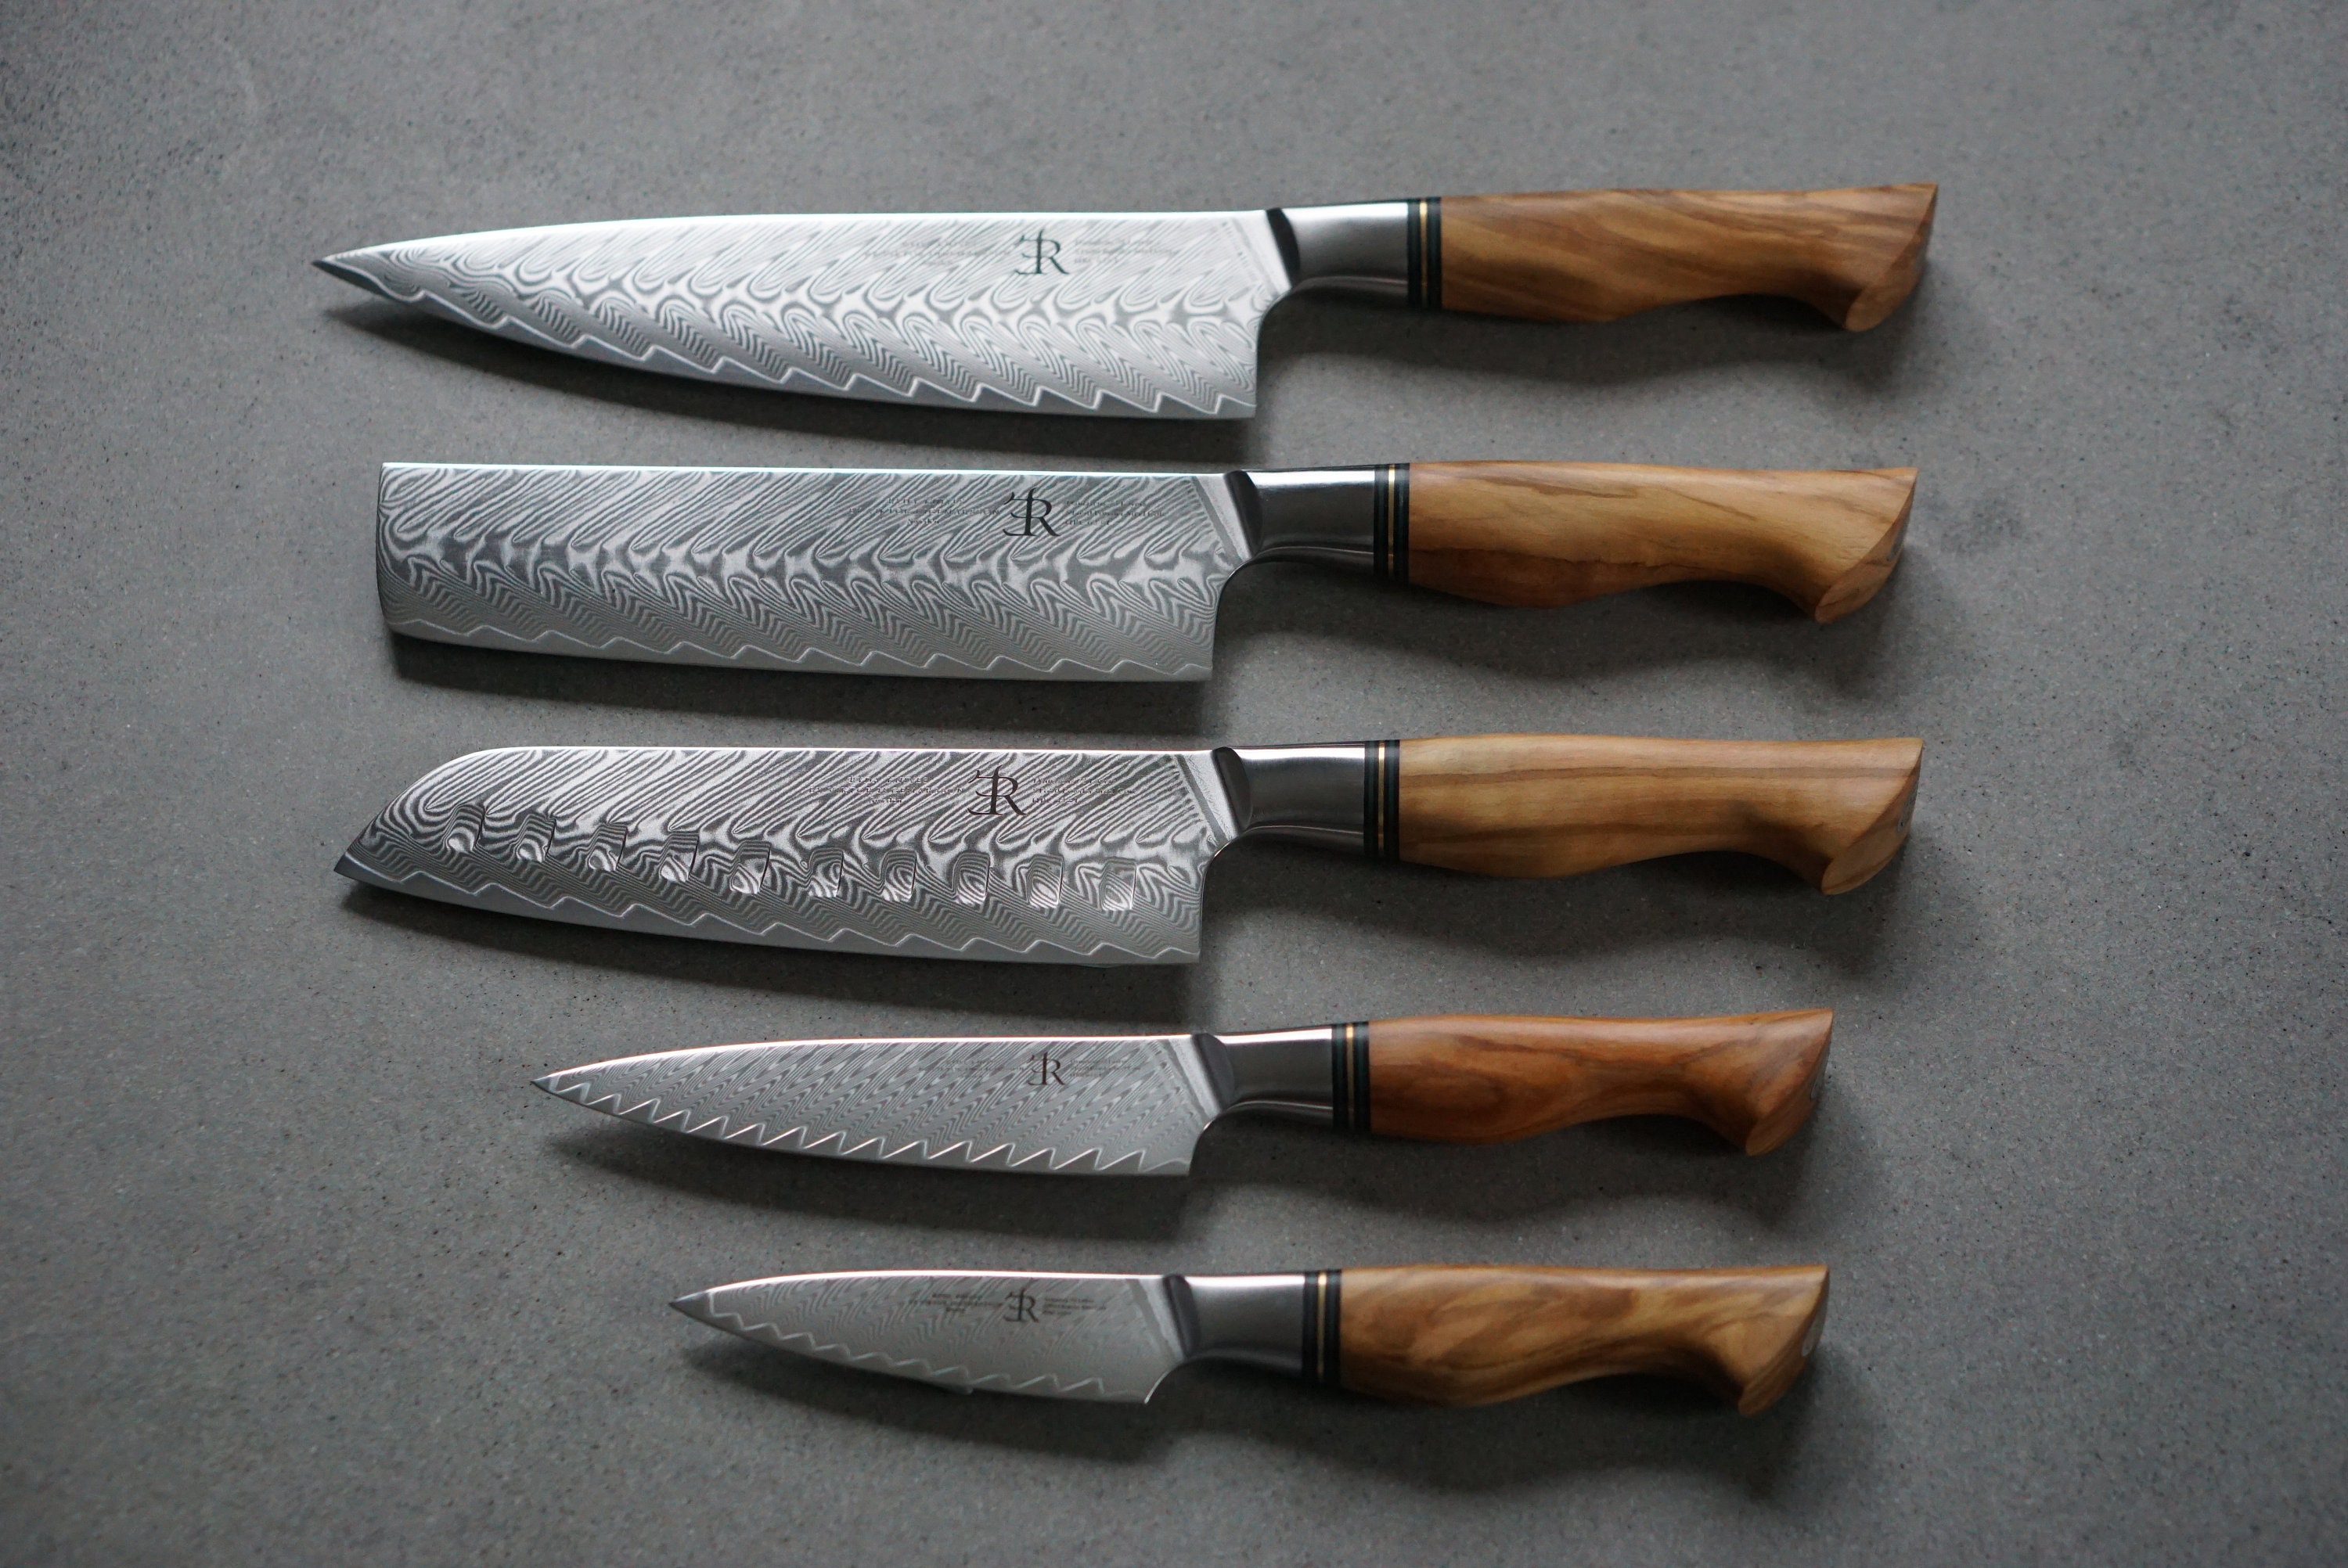 Rada Cutlery Oak Block 7 Pc Stainless Steel Kitchen Knife Set with  Aluminum